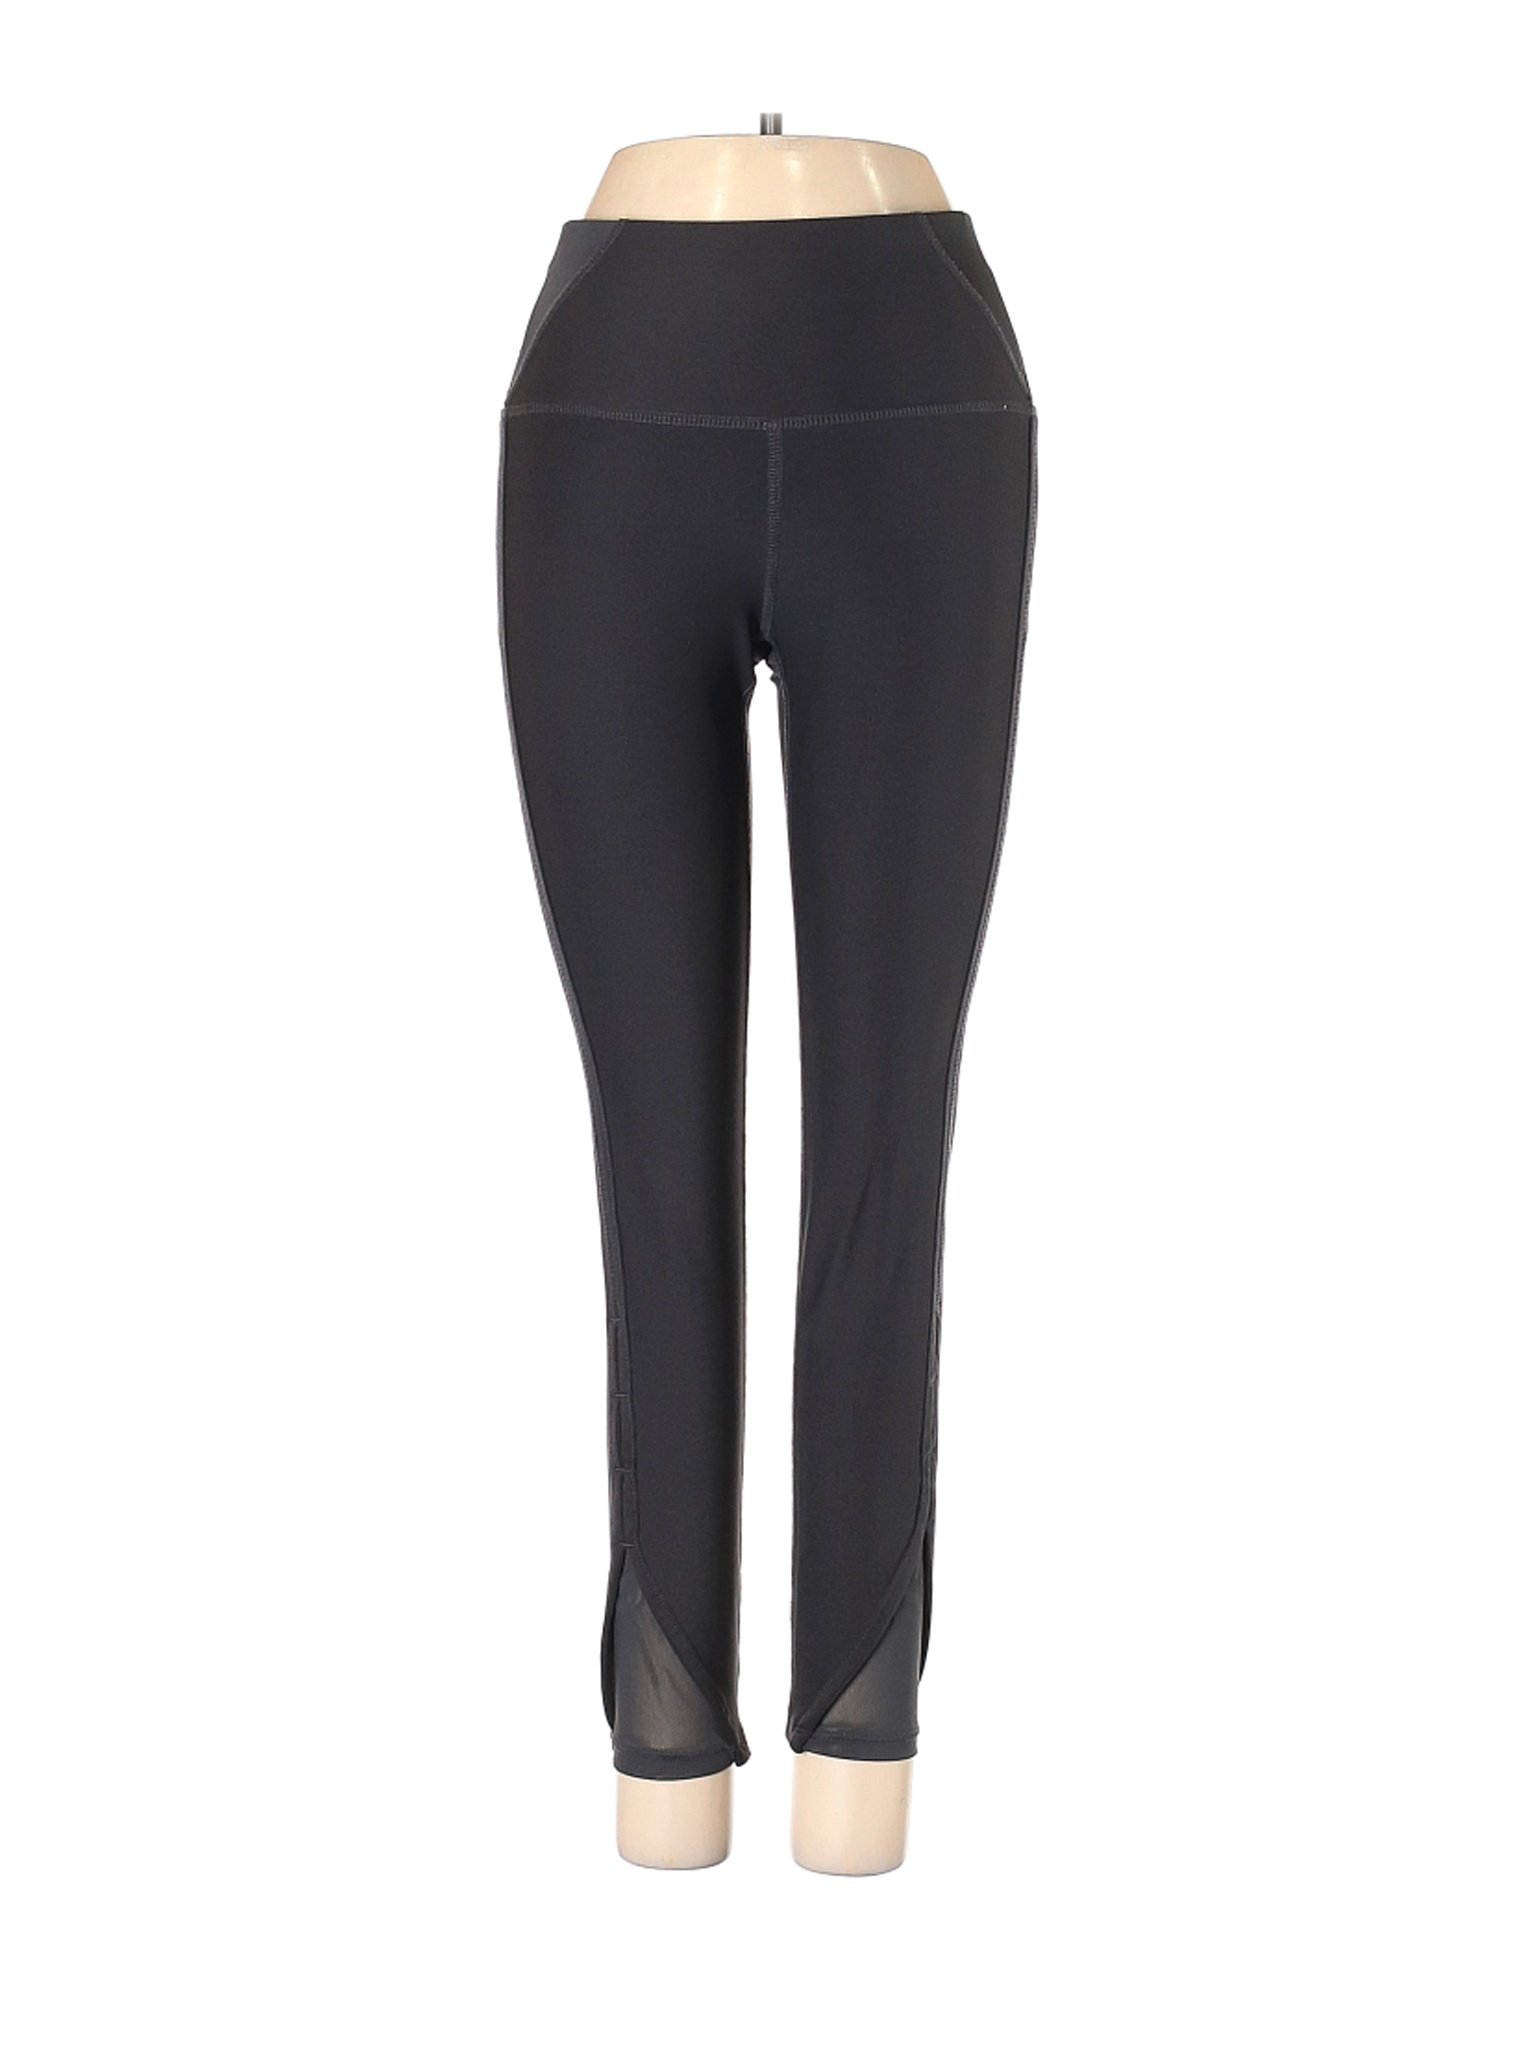 Apana Women Black Active Pants XS | eBay